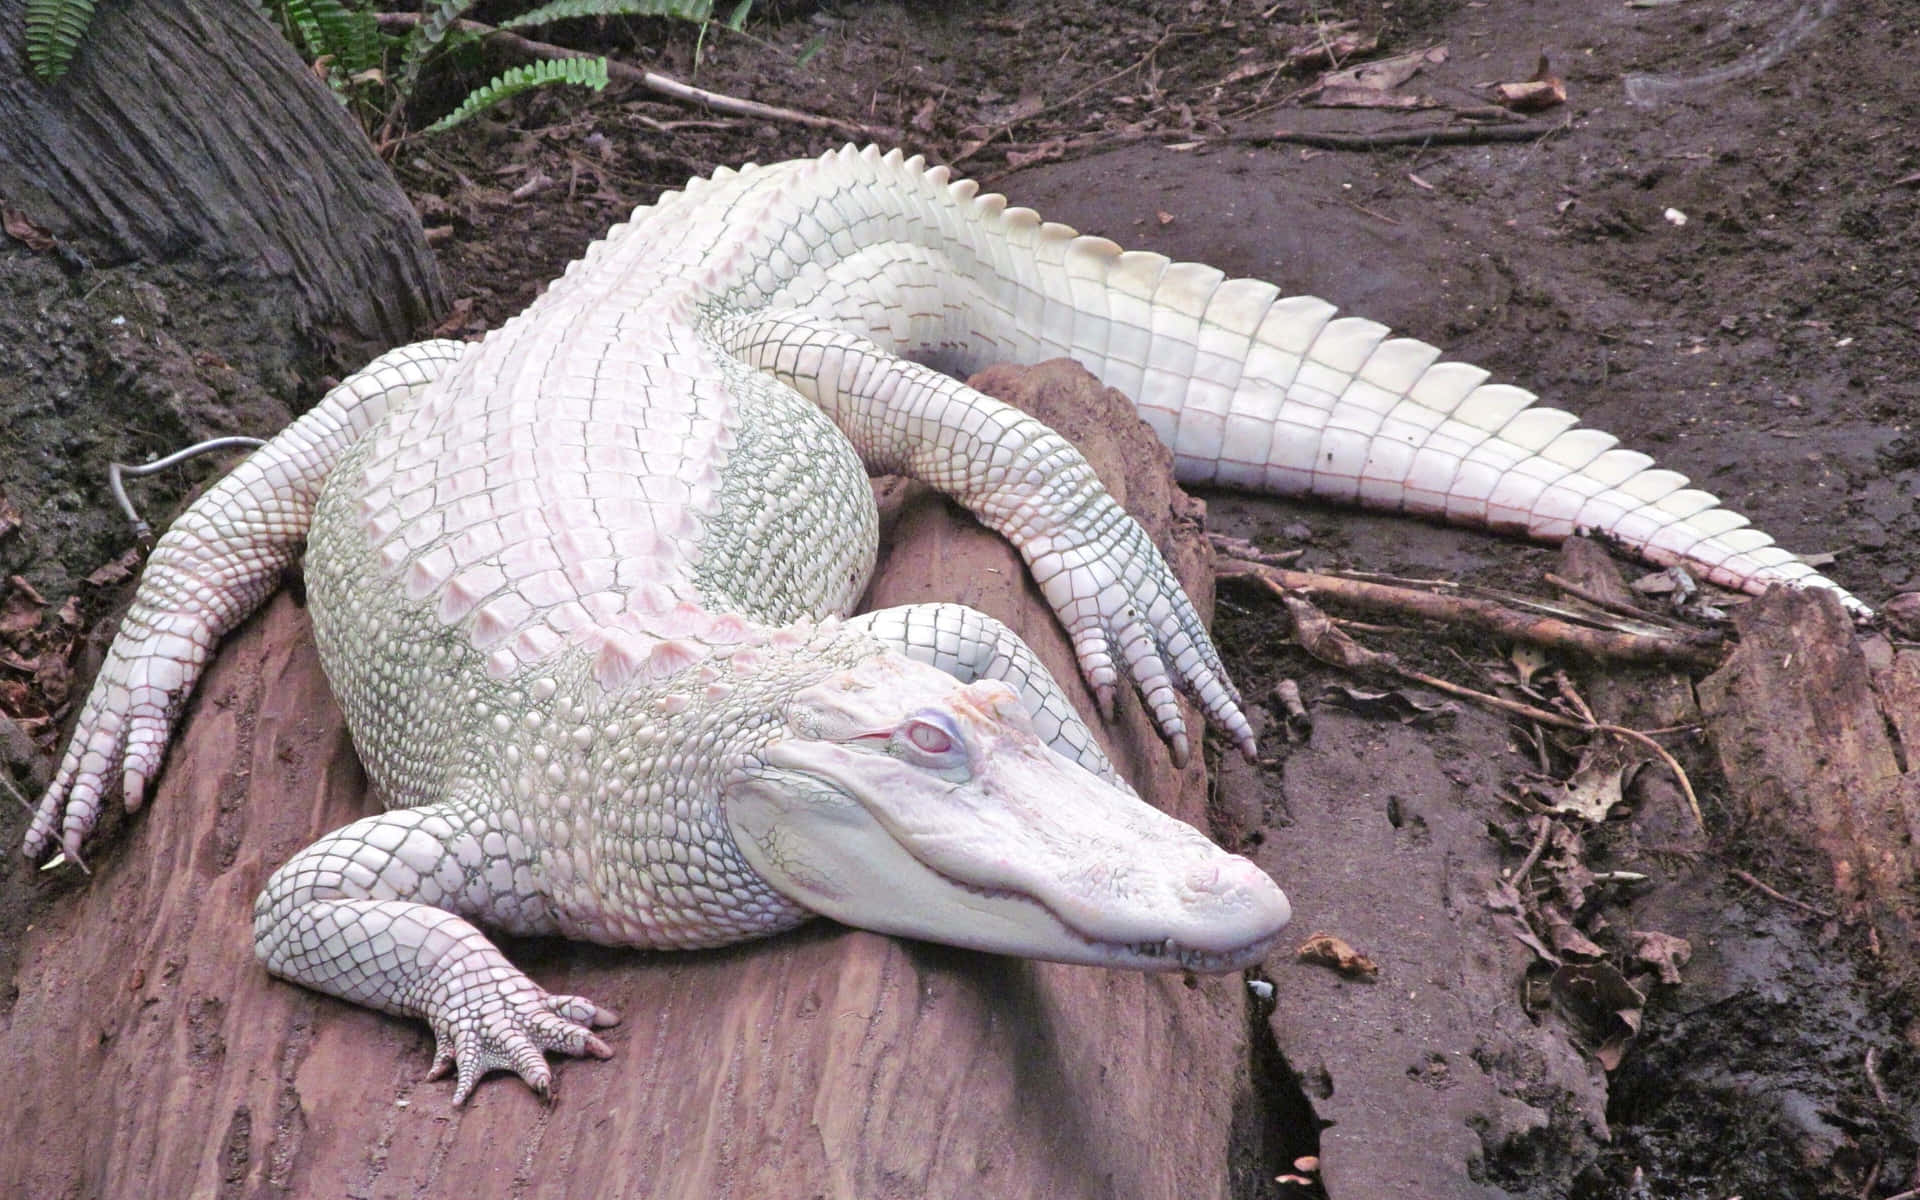 Glimpse of an Alligator's Natural Habitat